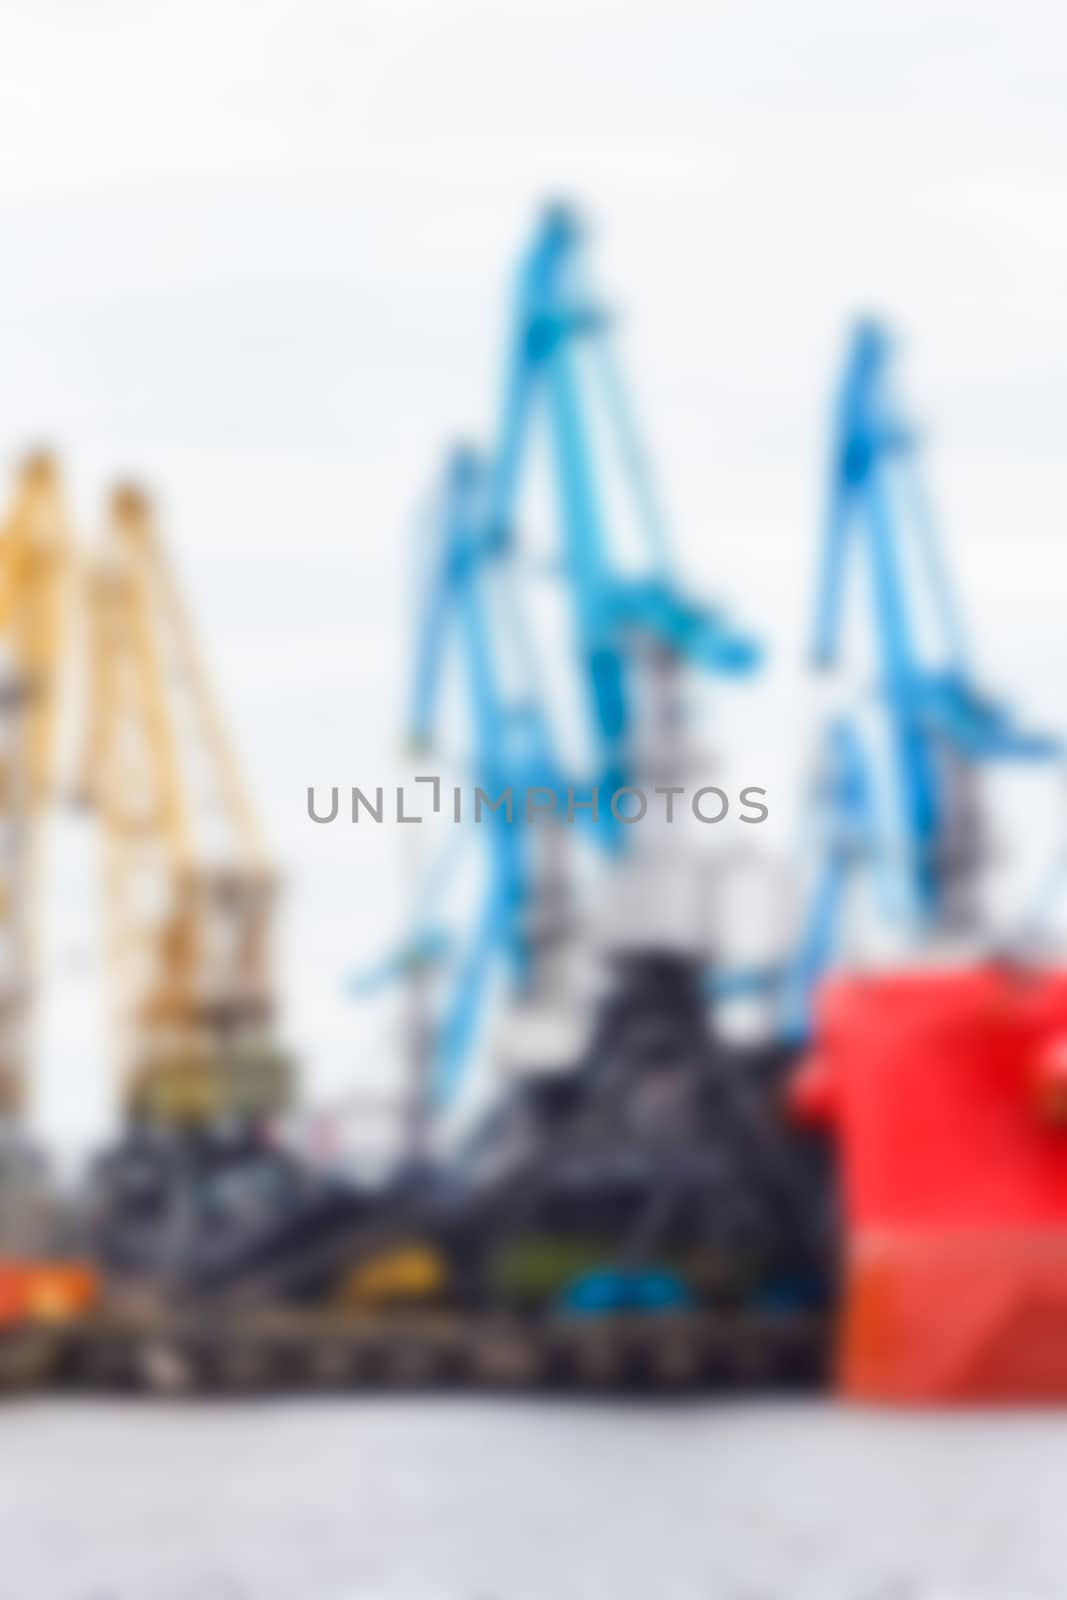 Portal cargo cranes - blurred image by sengnsp